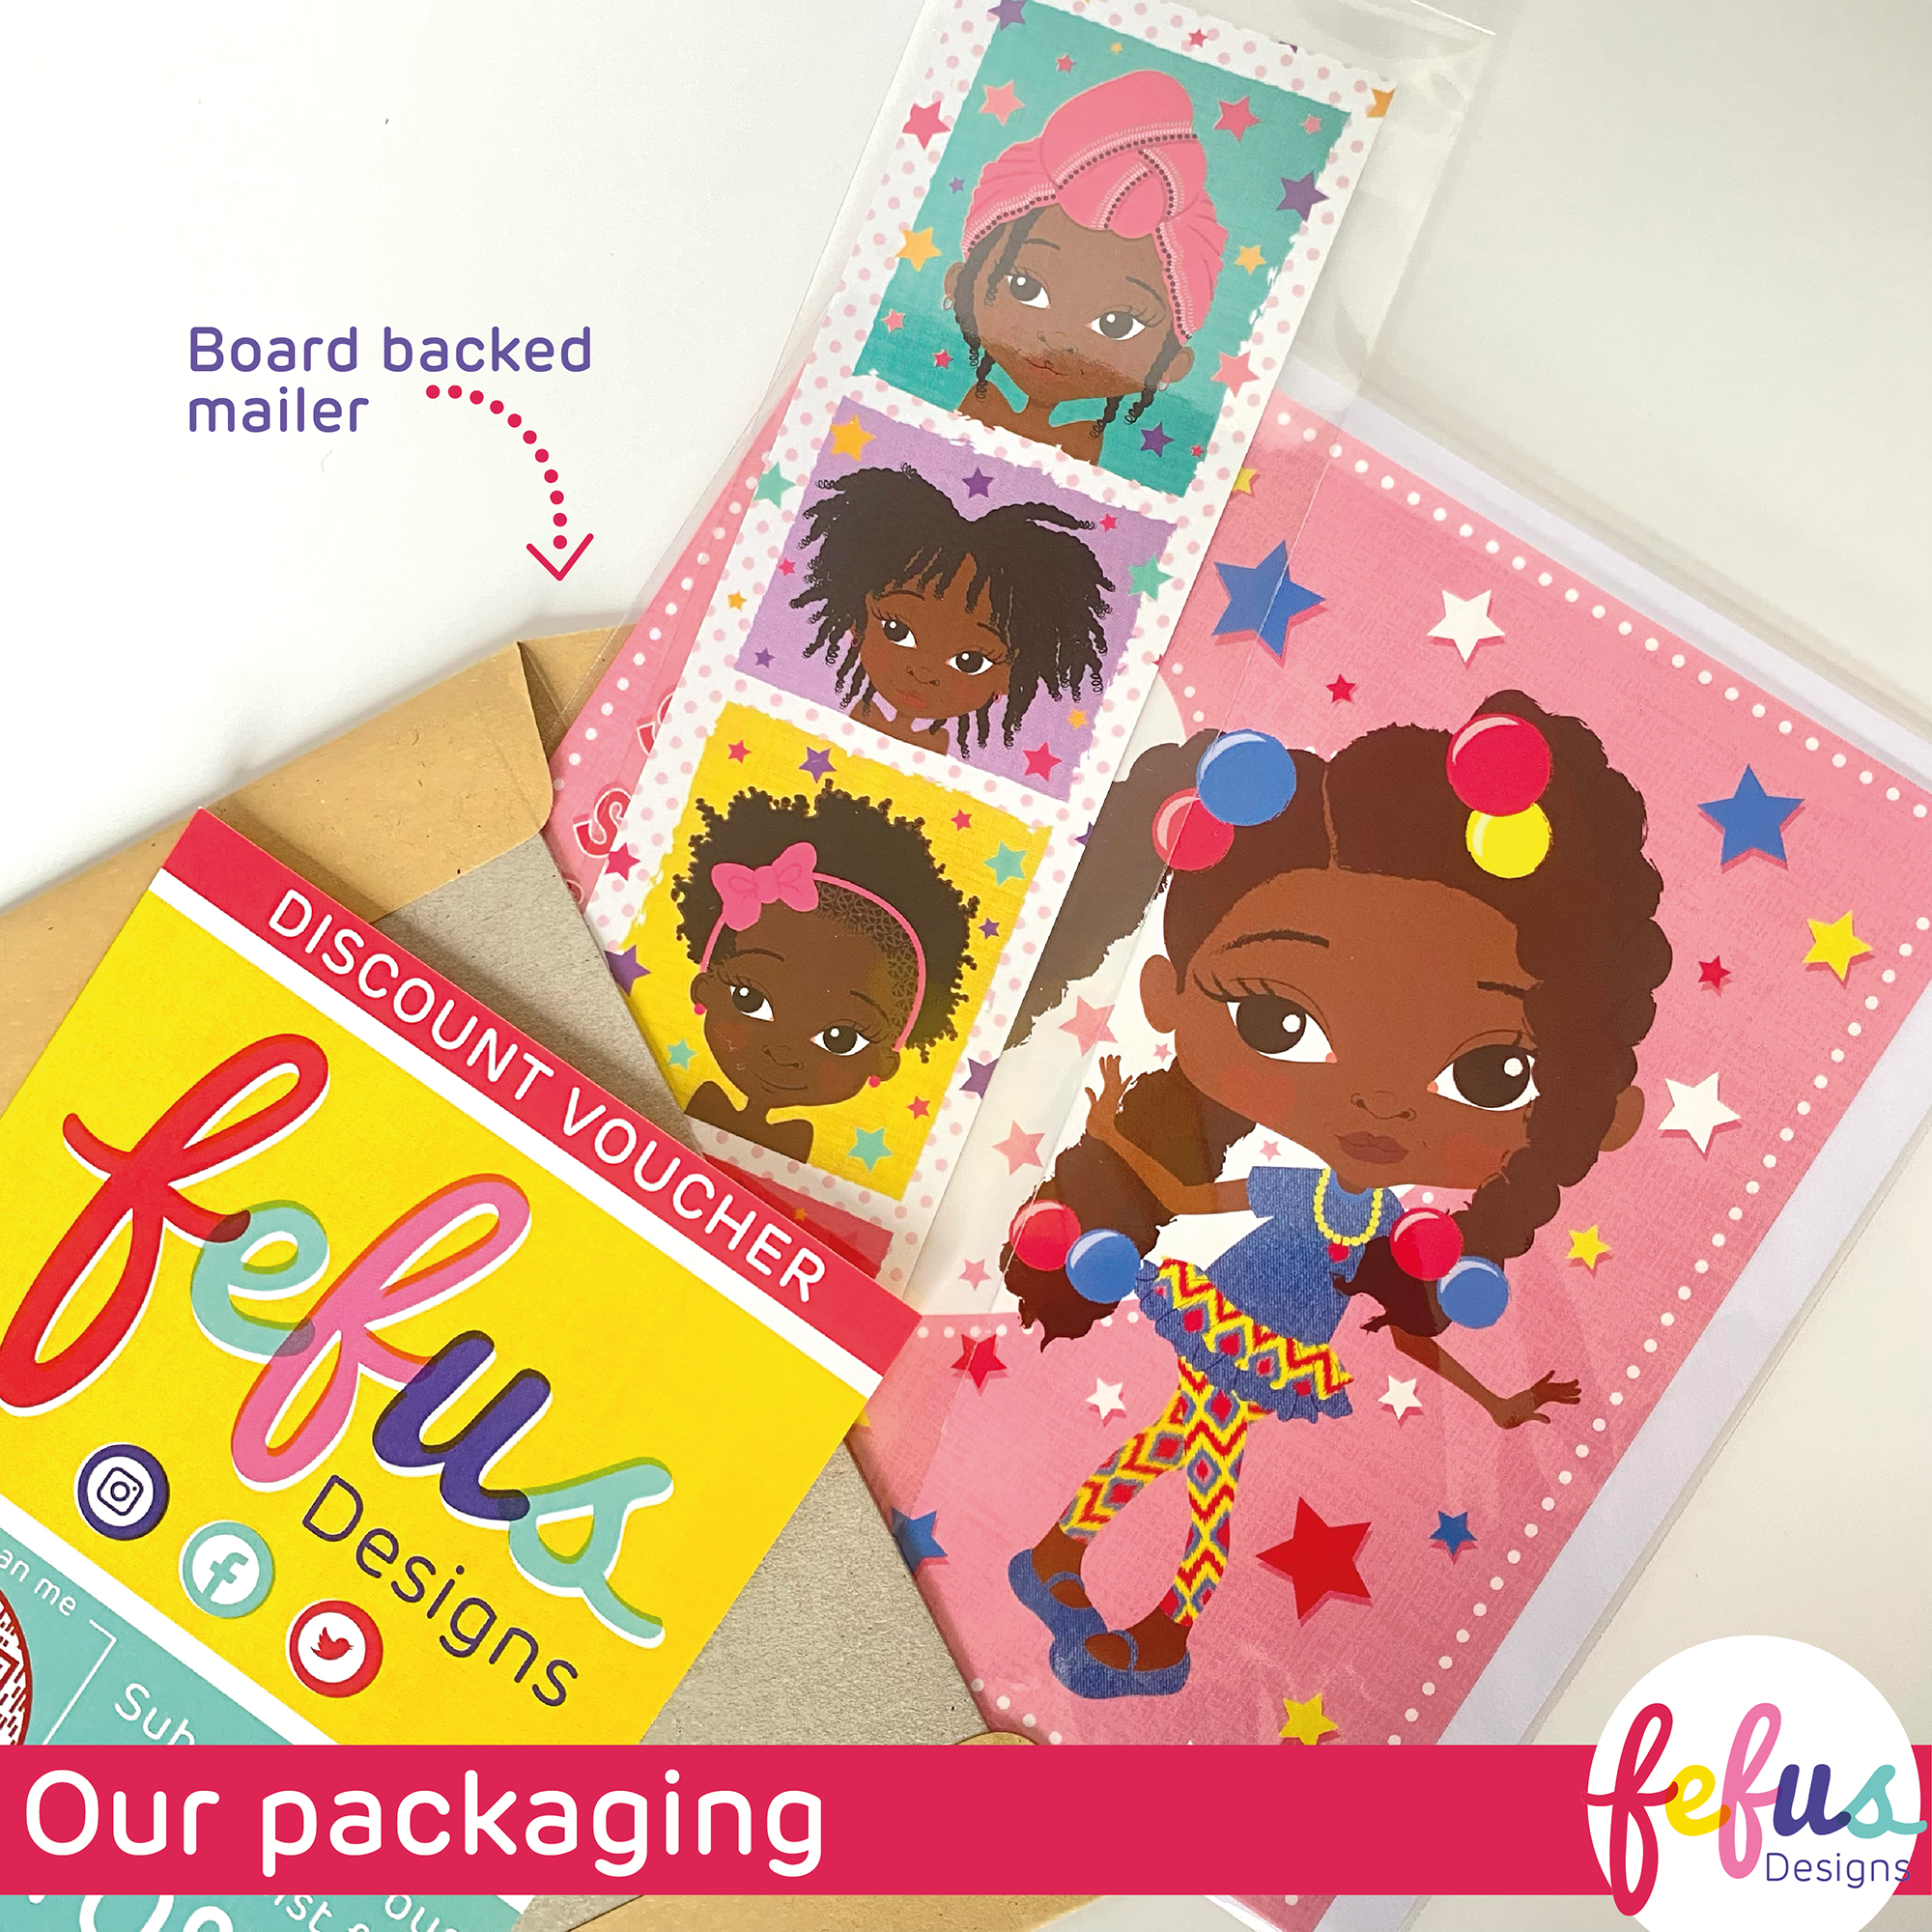 Hakeem - Little King - Black Childrens Birthday Card | Fefus designs